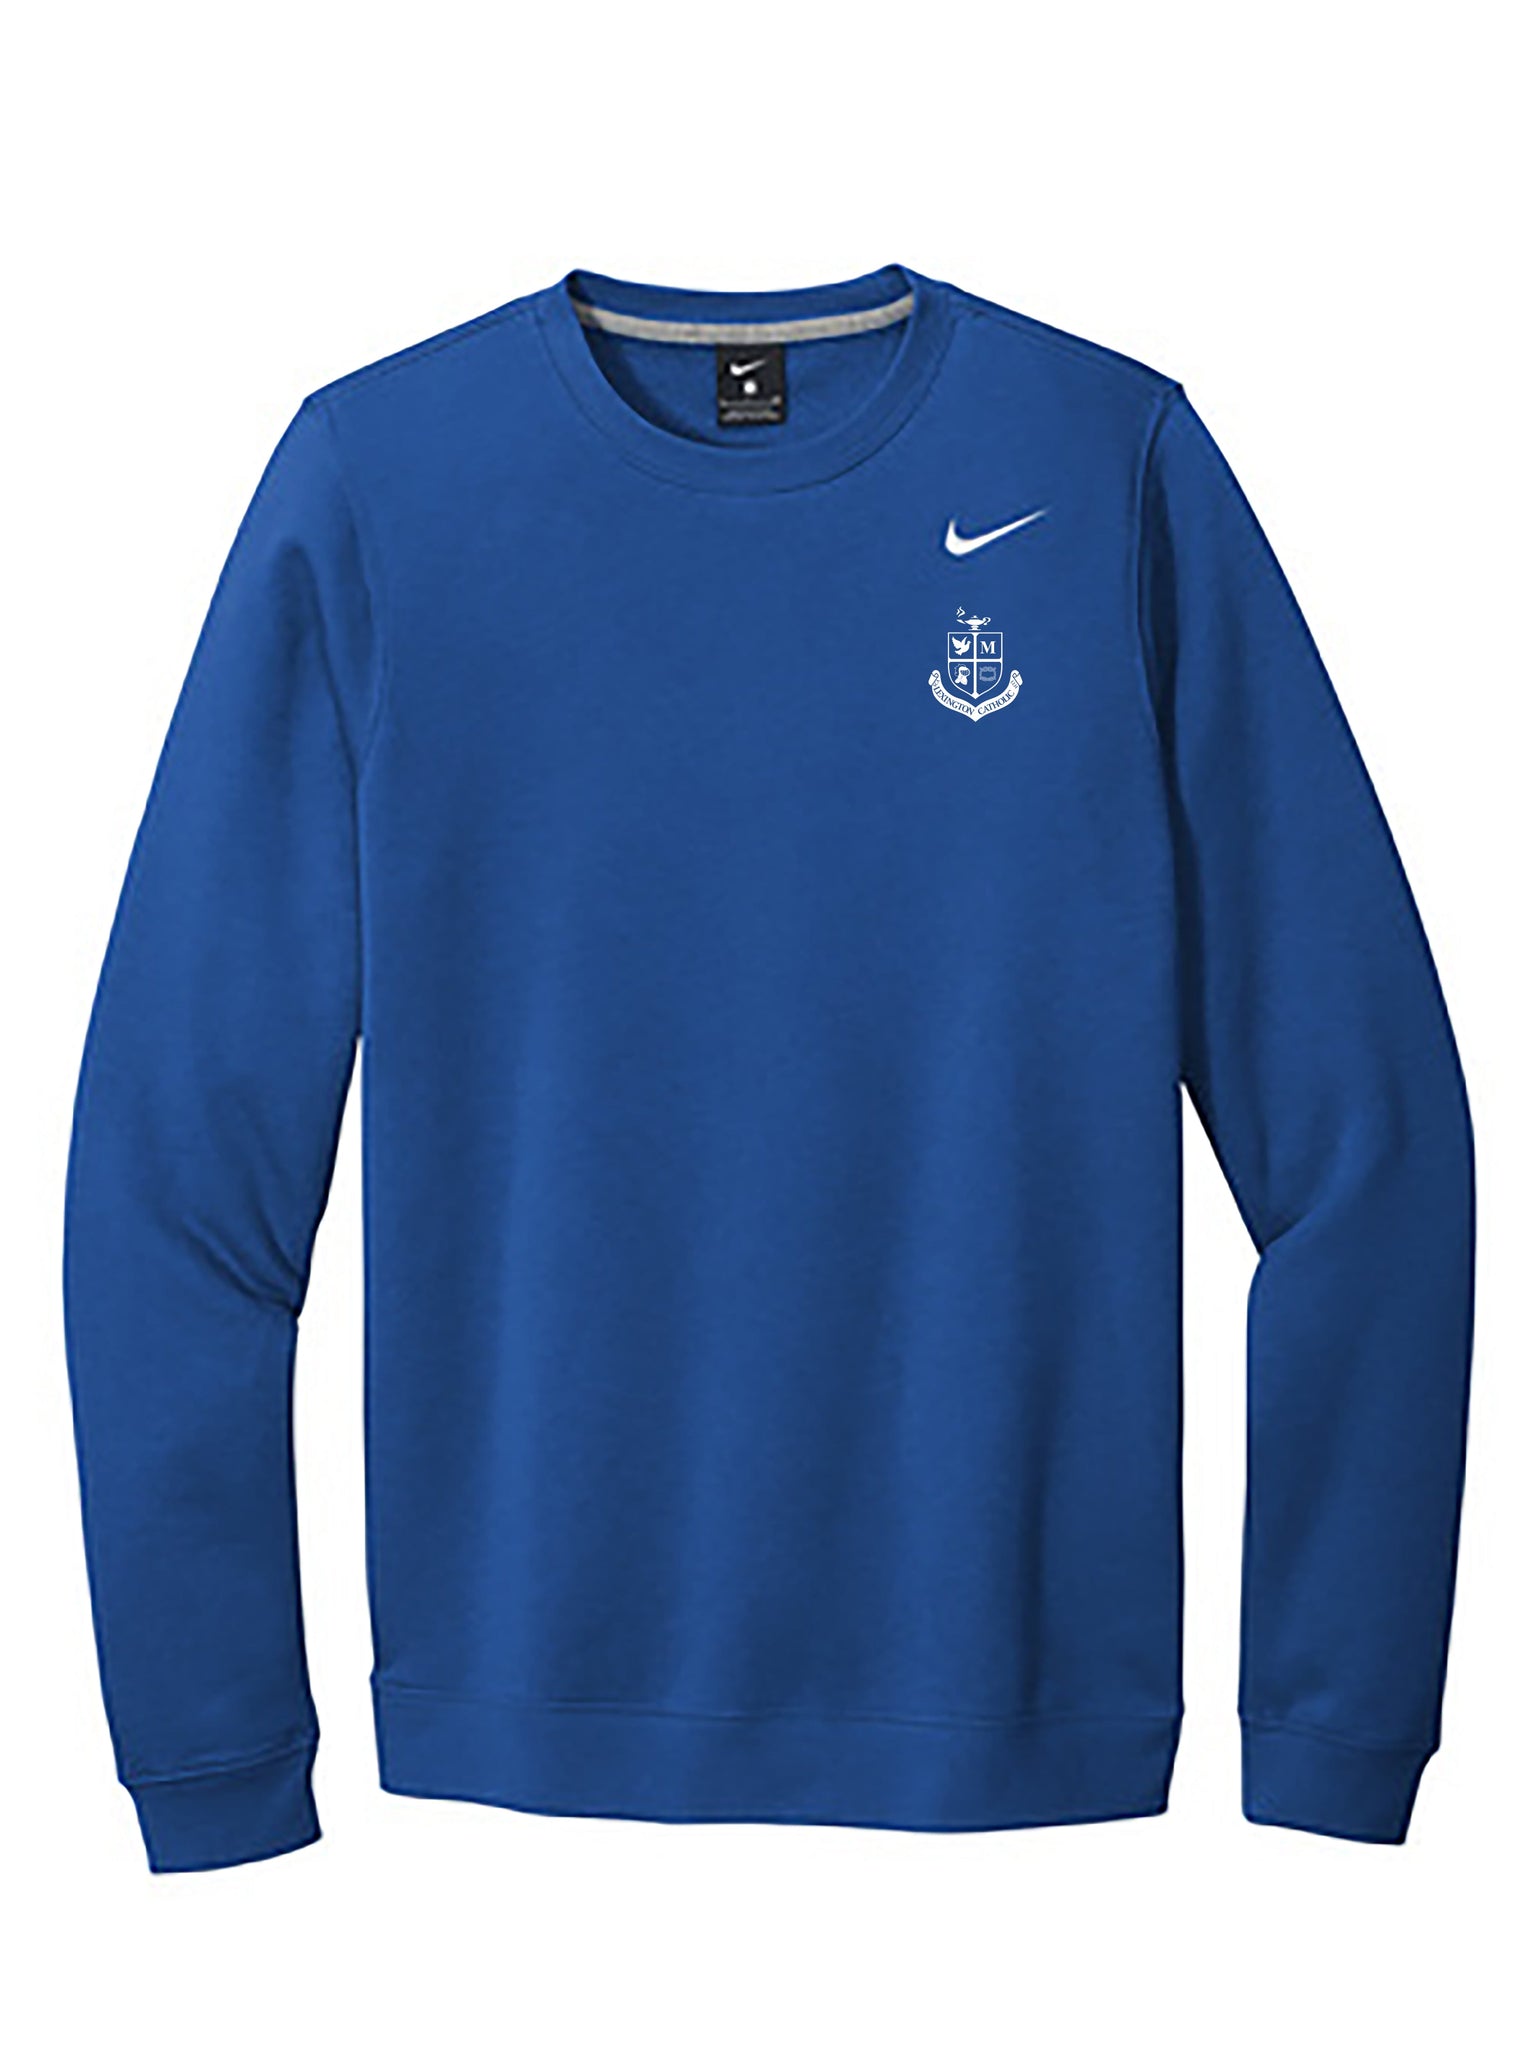 Nike Crewneck Sweatshirt Royal Blue